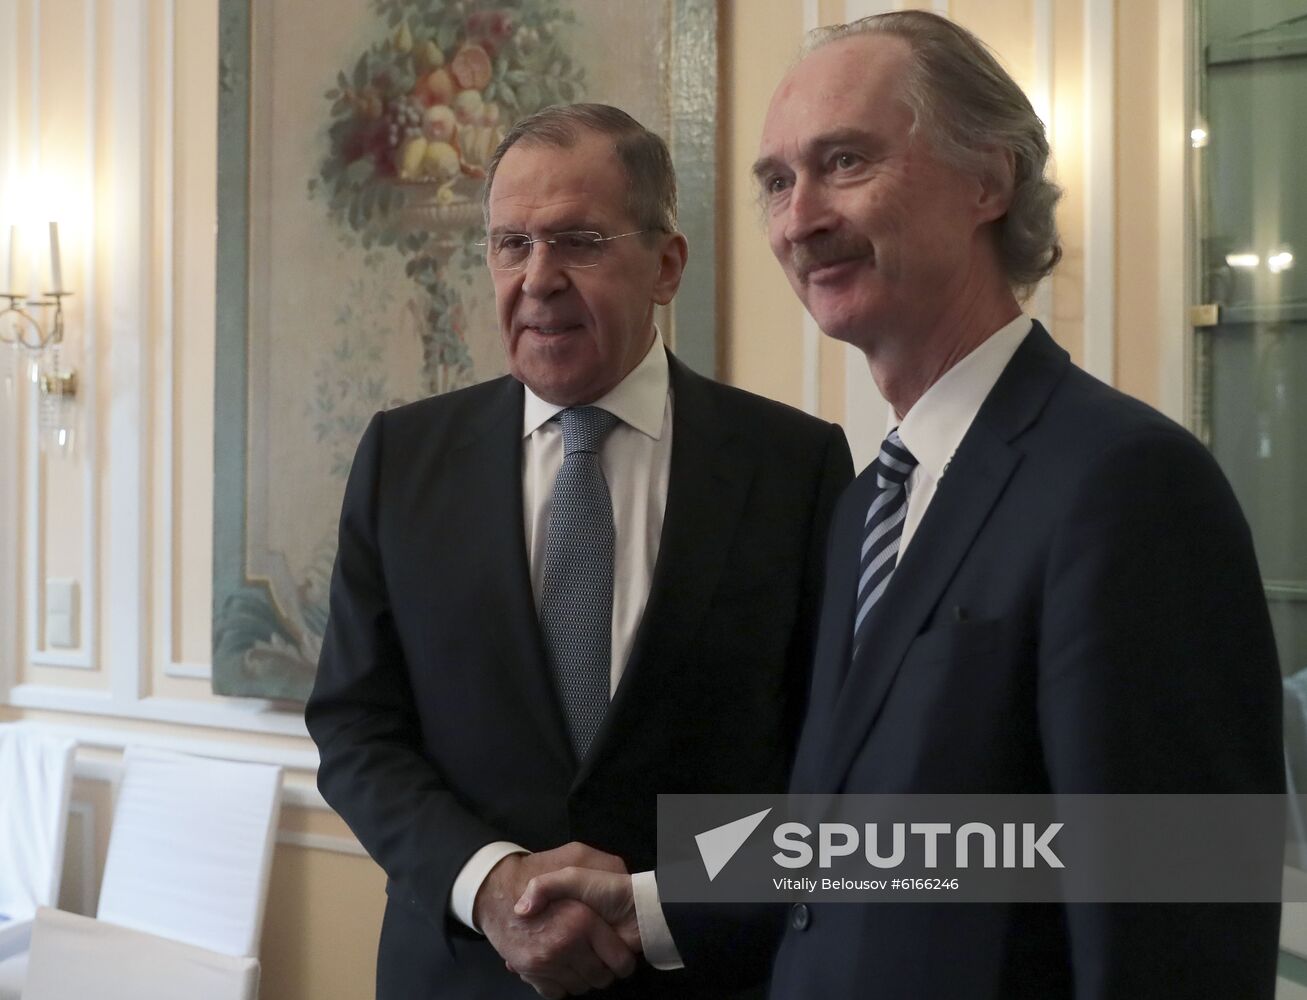 Germany Russia Syria Talks